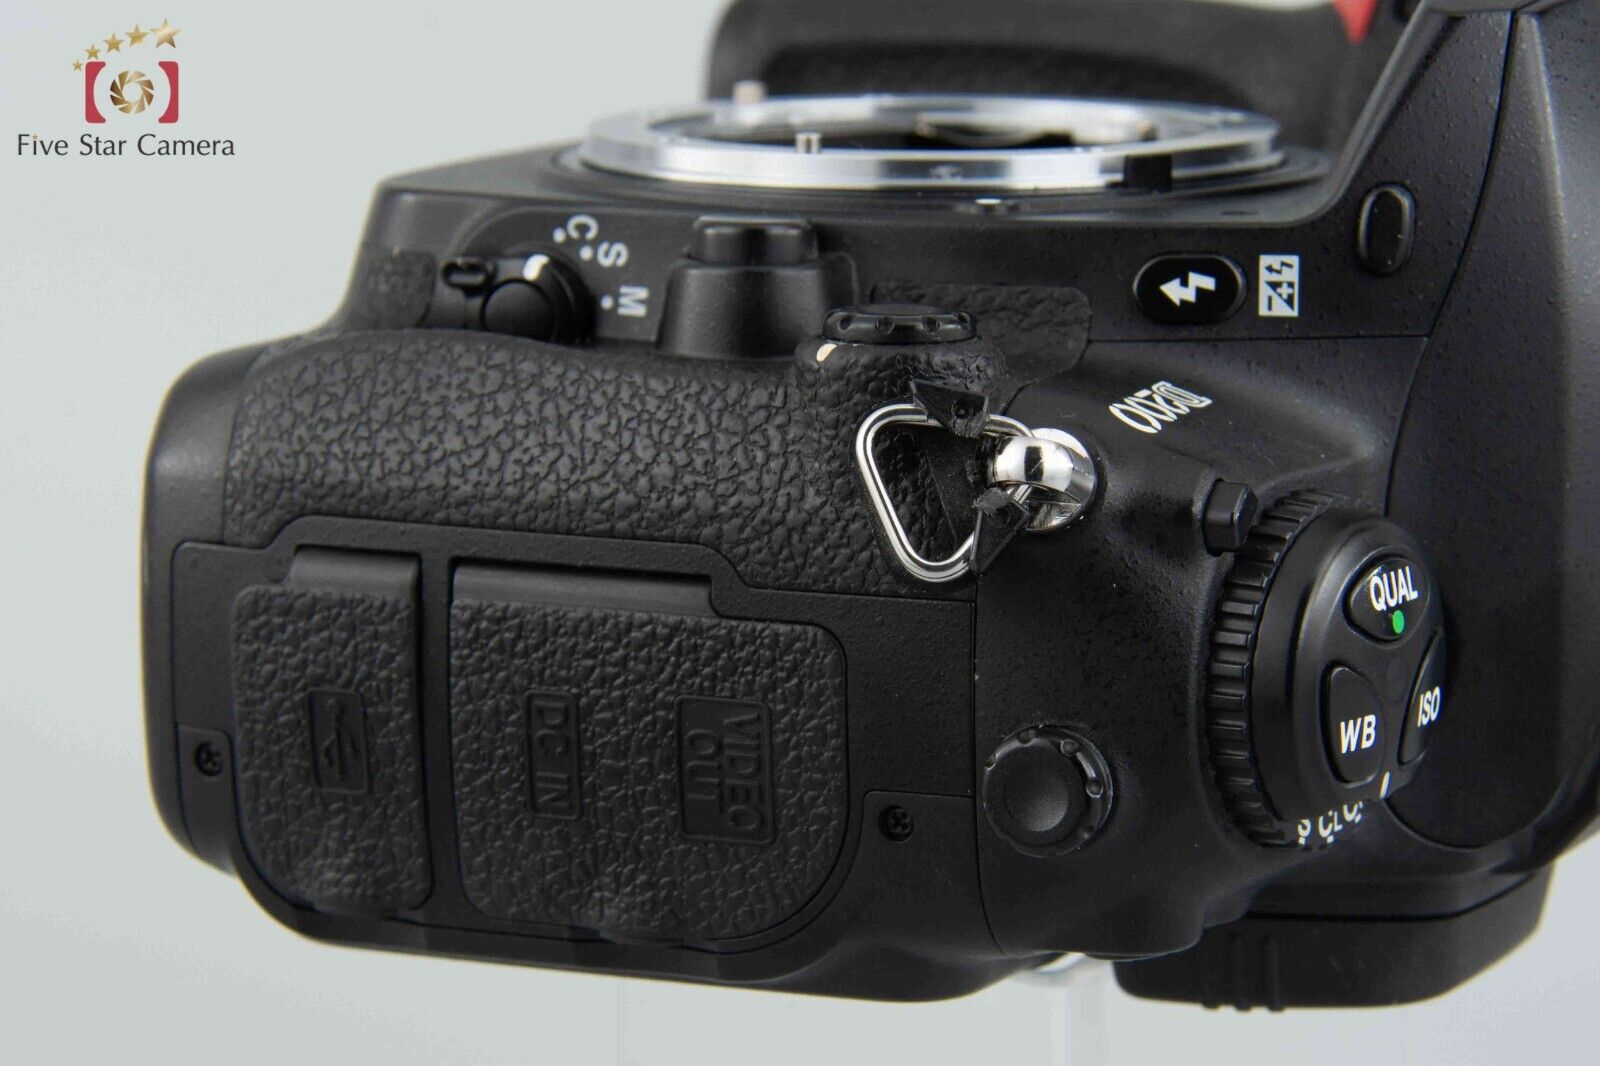 "Shutter count 5,372" Nikon D200 10.2 MP Digital SLR Camera Body w/ Box